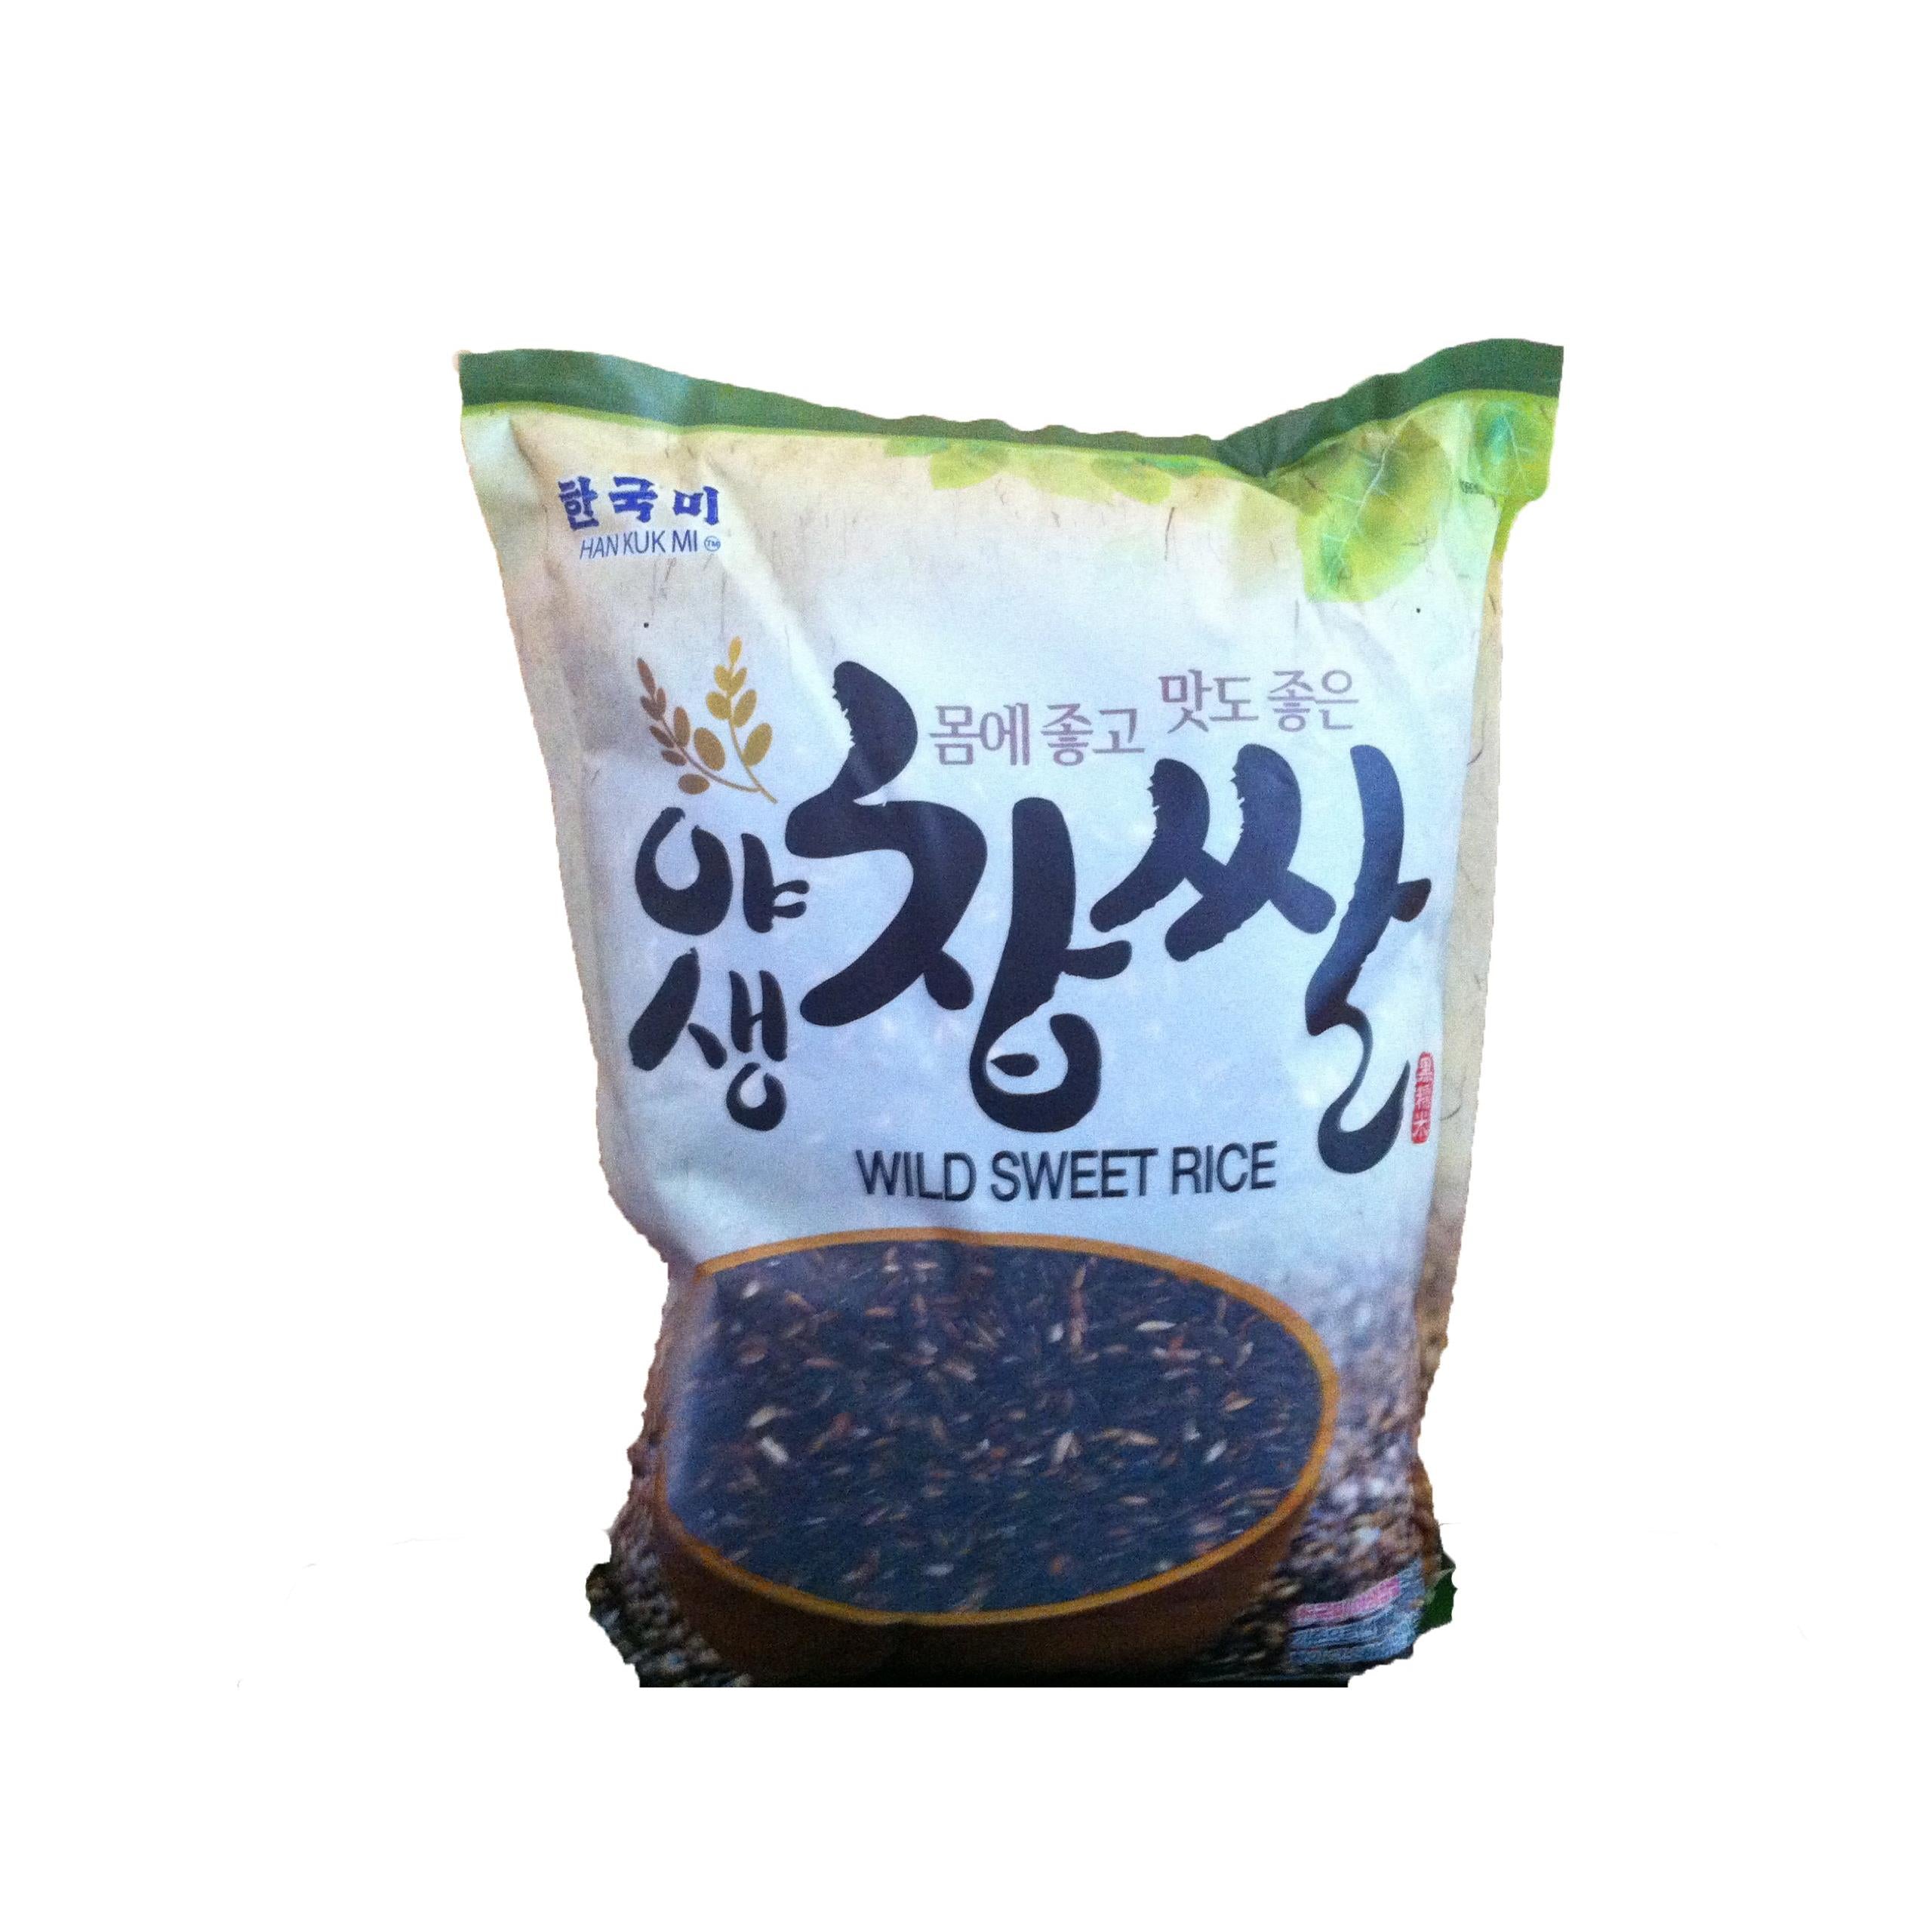 Han Kuk Mi Wild Sweet Rice, 2 Pound